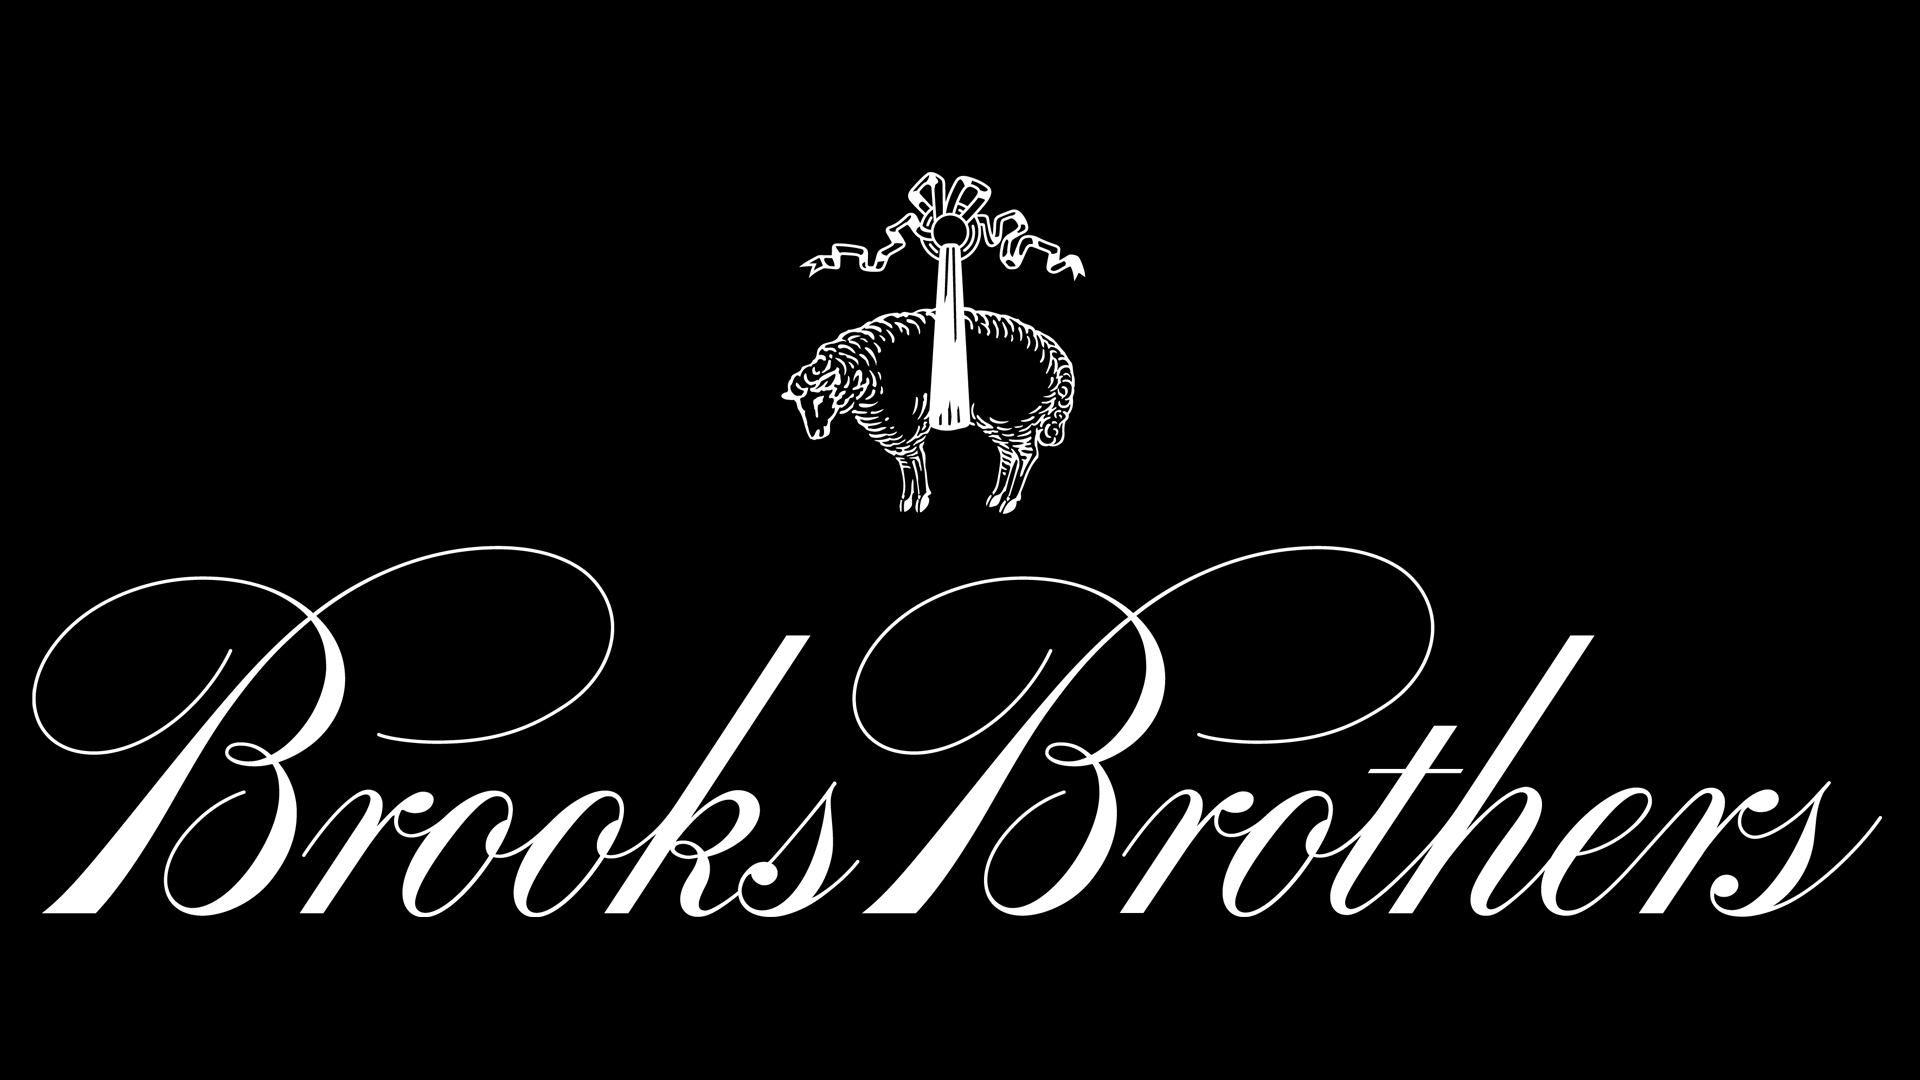 brooks brothers logo pig